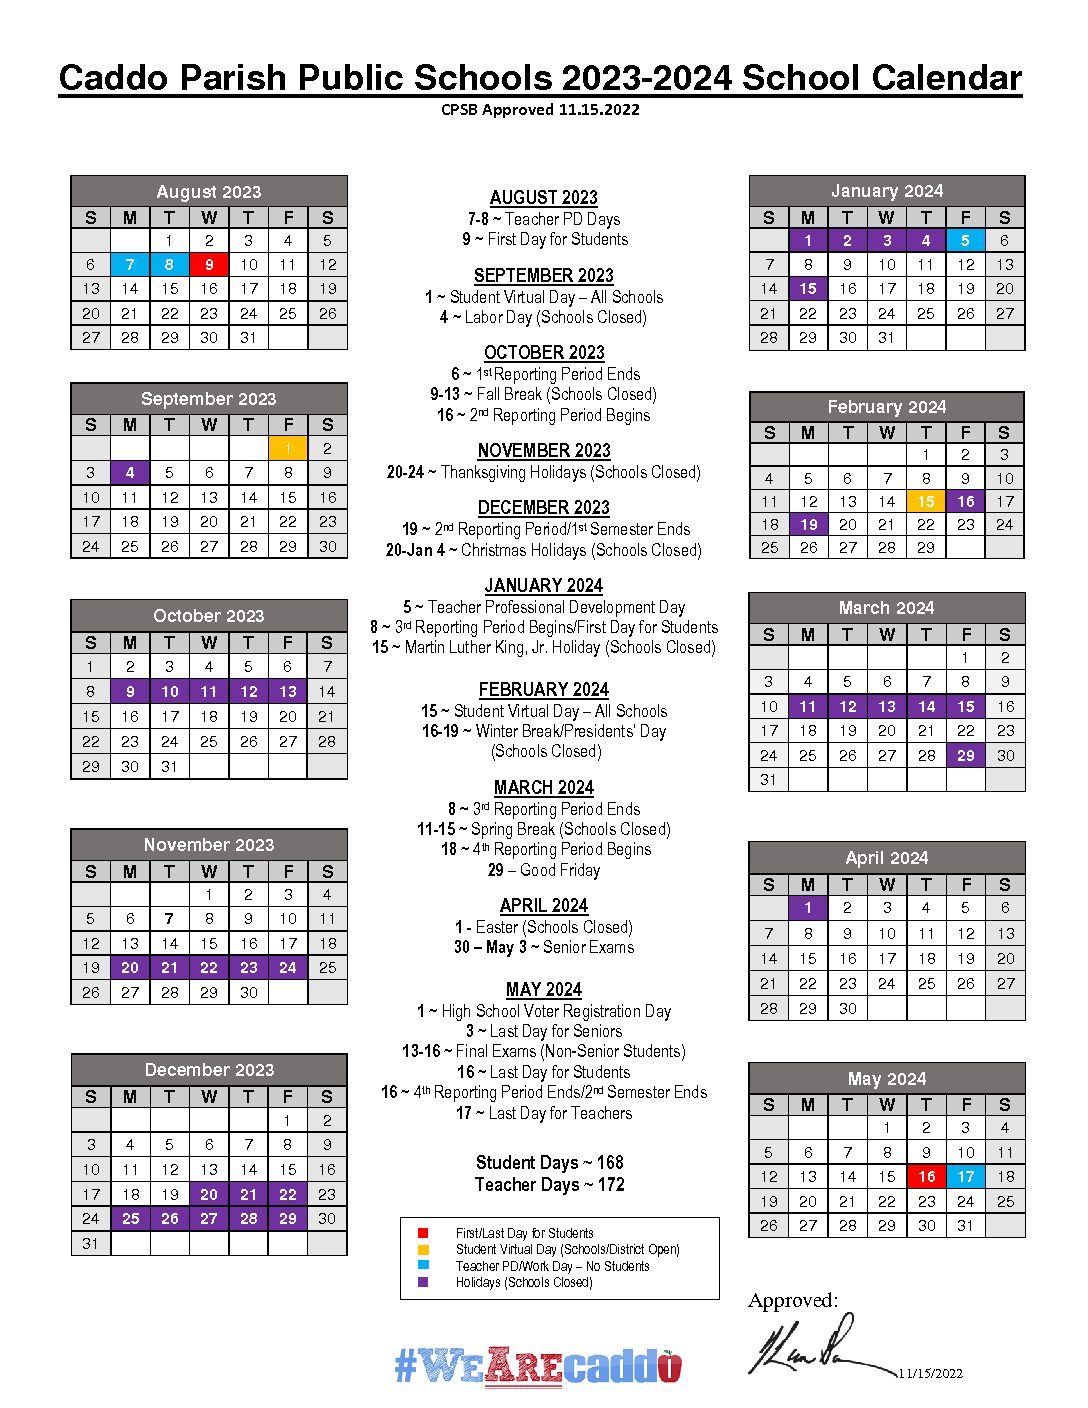 Caddo Parish Public Schools Calendar 2023 2024